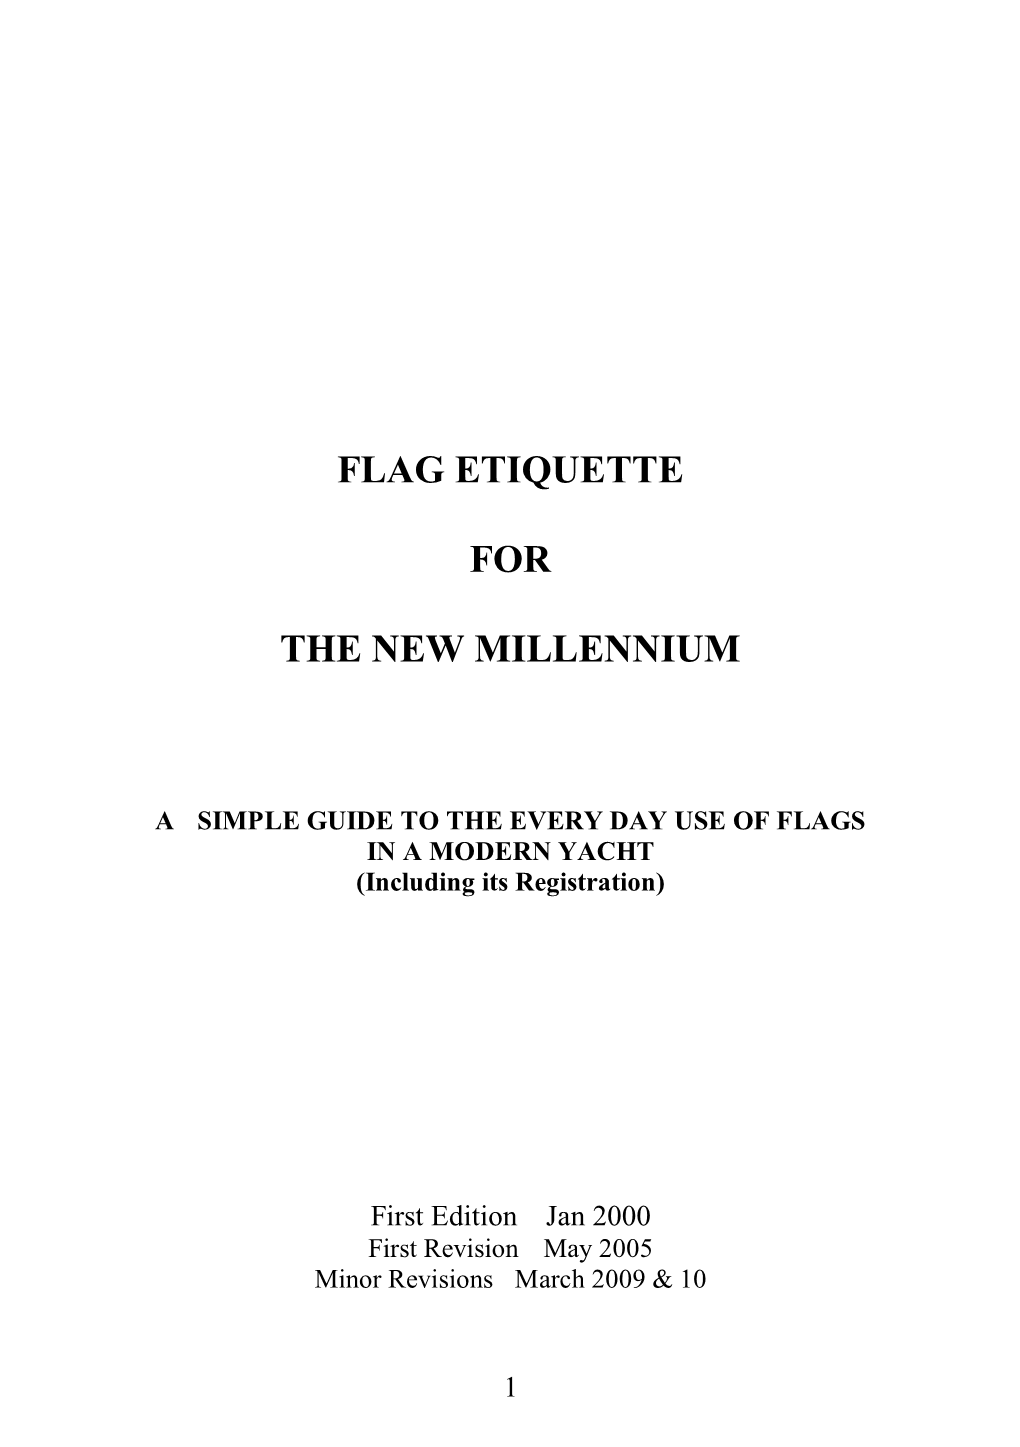 Flag Etiquette for the New Millennium